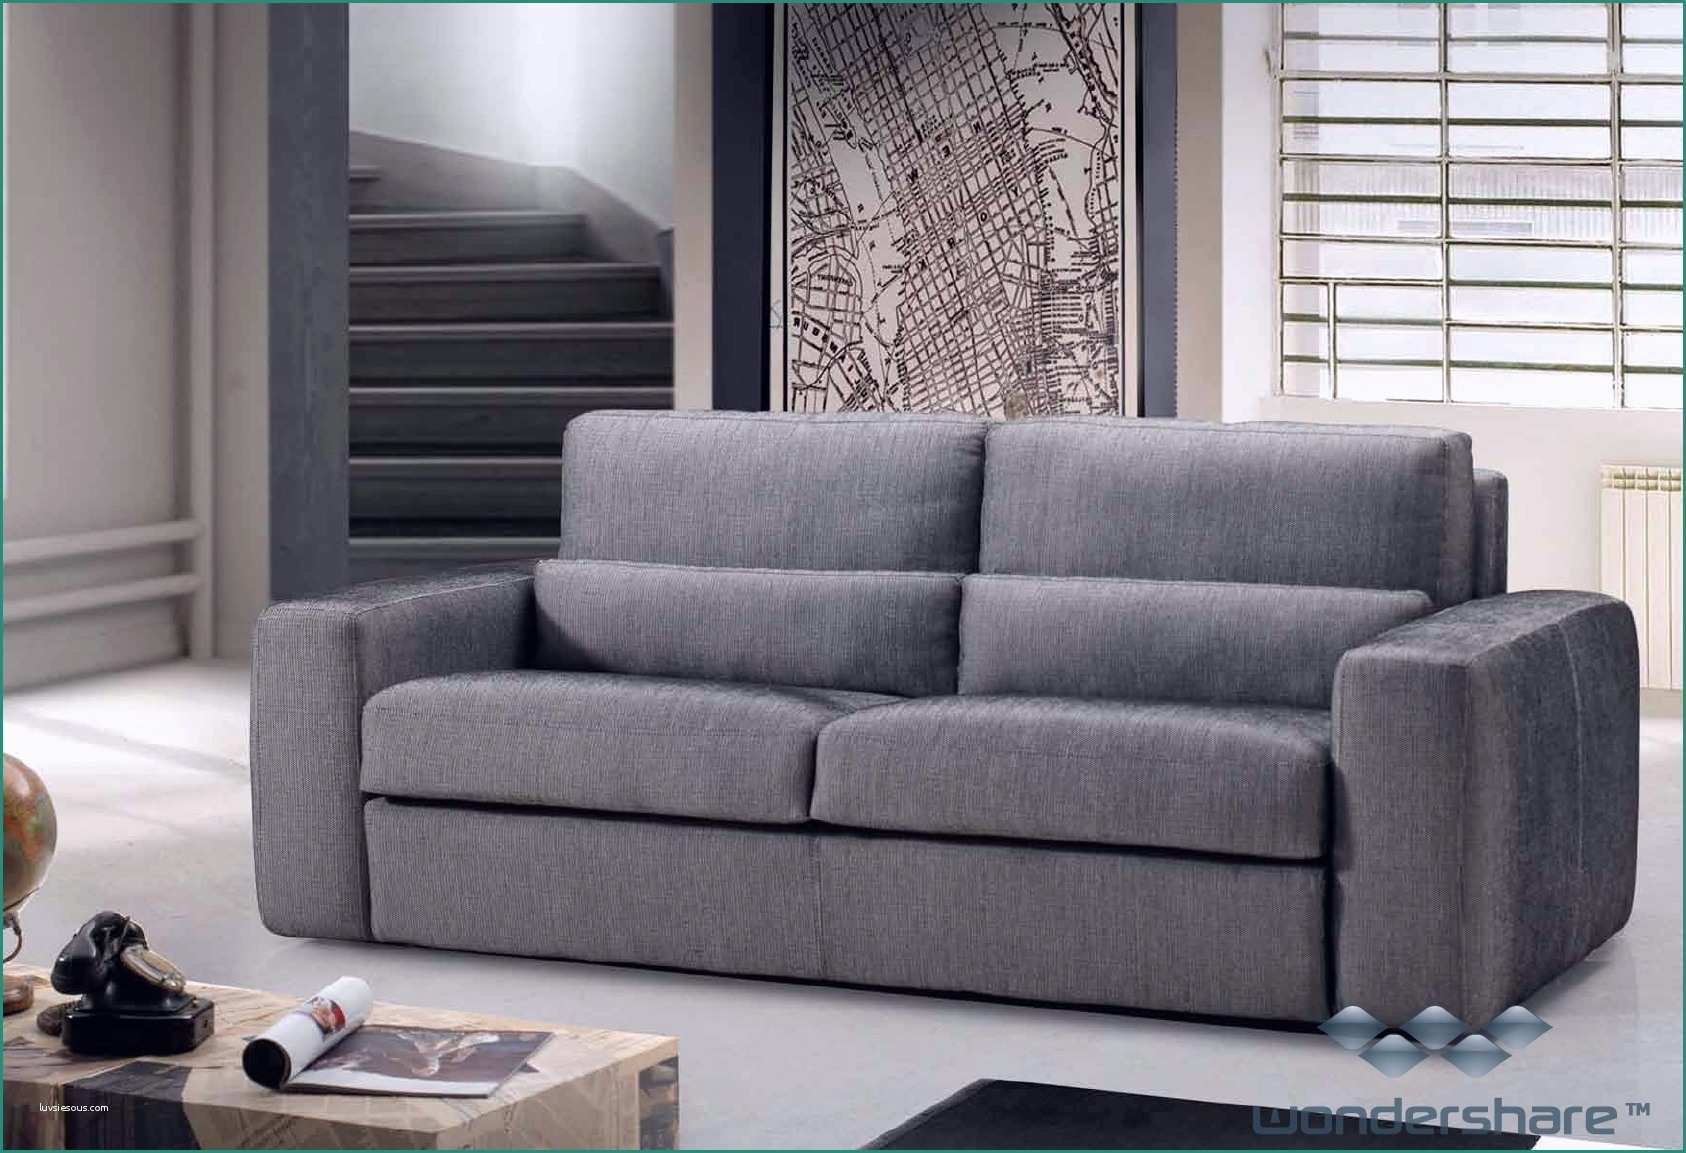 Mondo Relax Poltrone E Tanghetti Divani House solutions Pinterest Furniture Upholstery